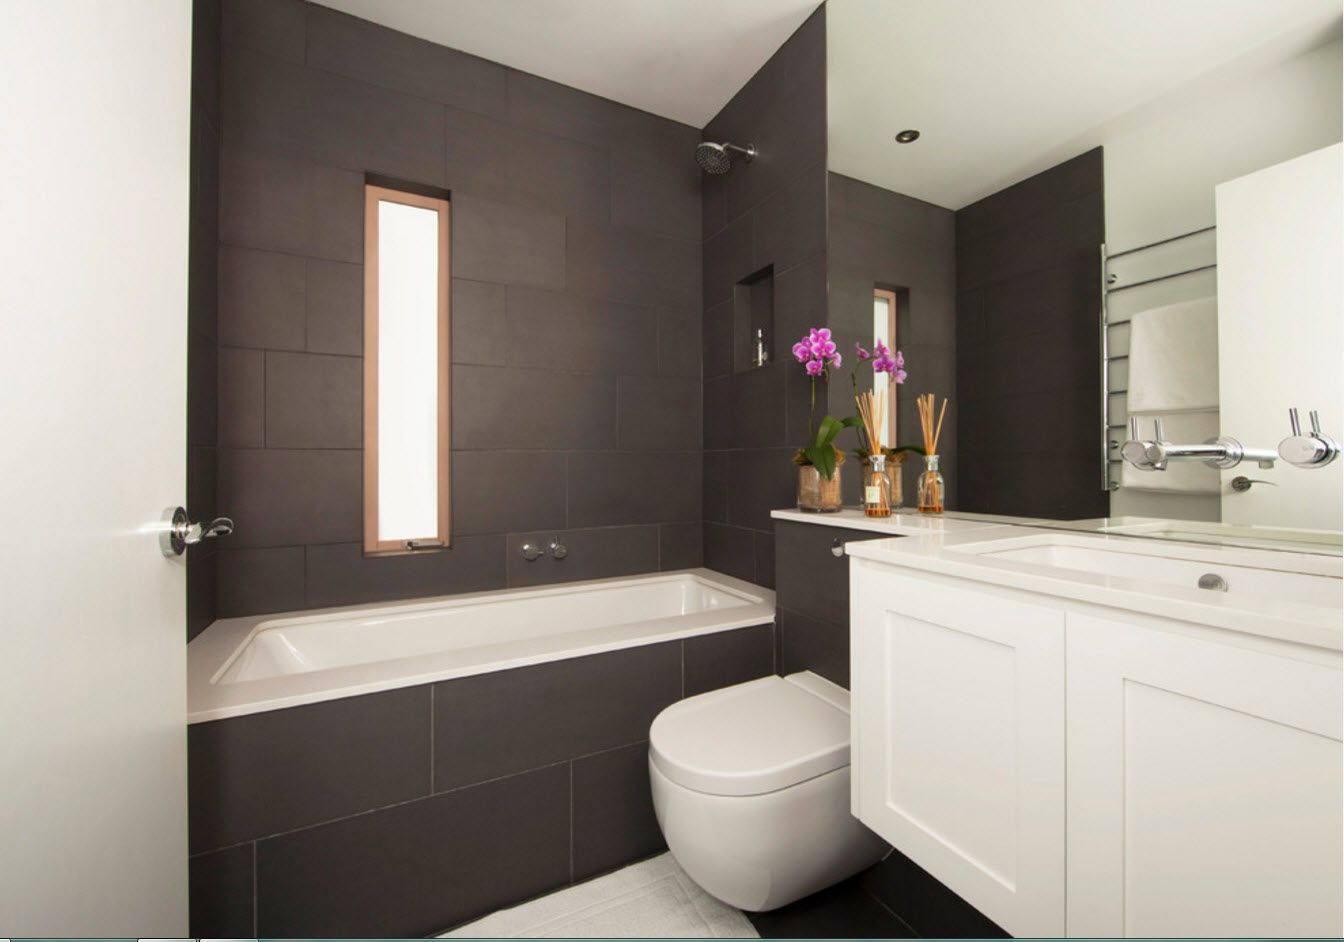 100 Small Bathroom Decoration Modern Design Ideas - Small Design Ideas